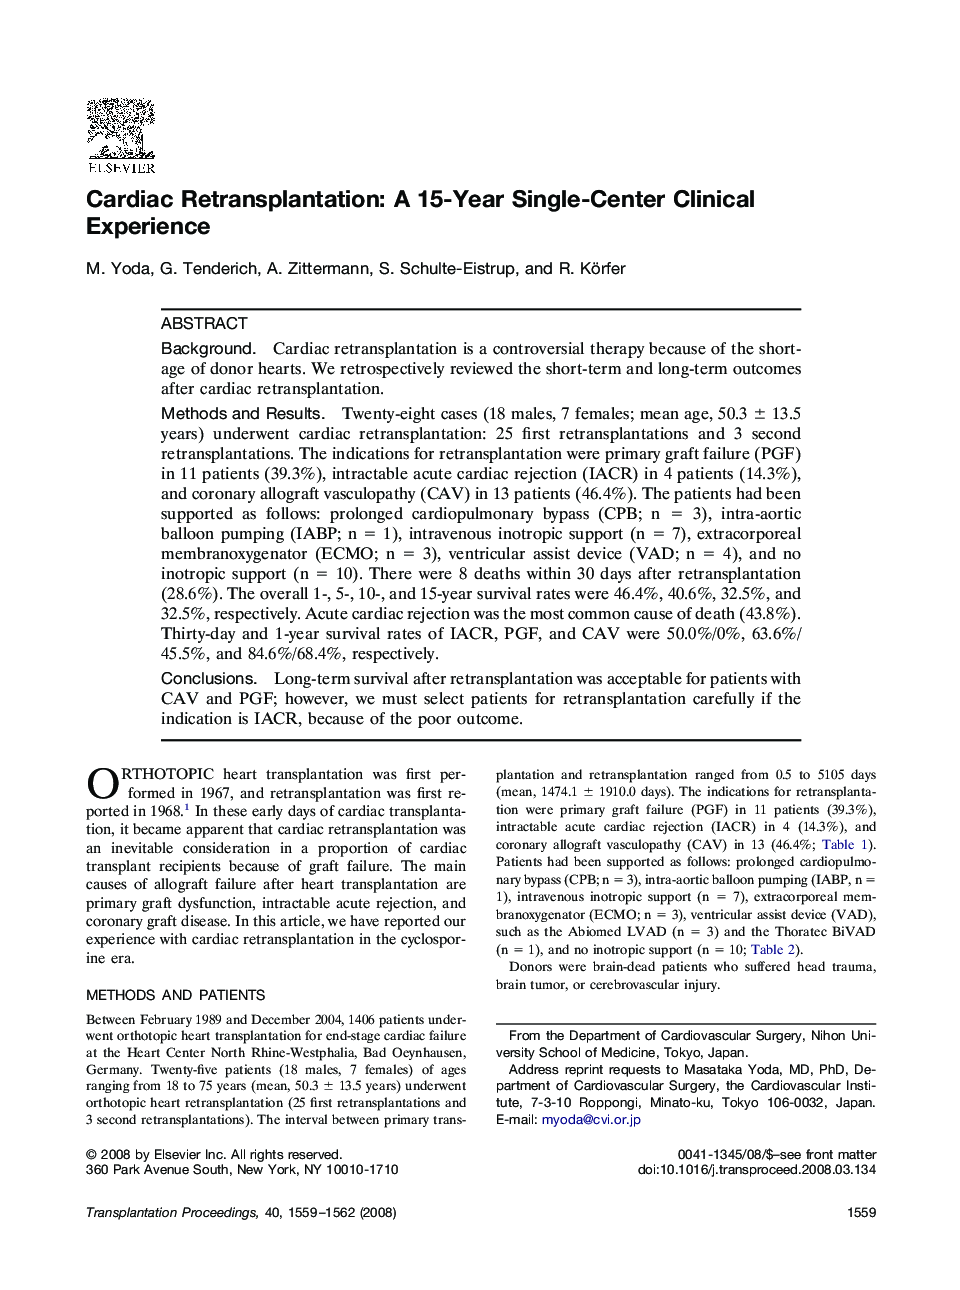 Cardiac Retransplantation: A 15-Year Single-Center Clinical Experience